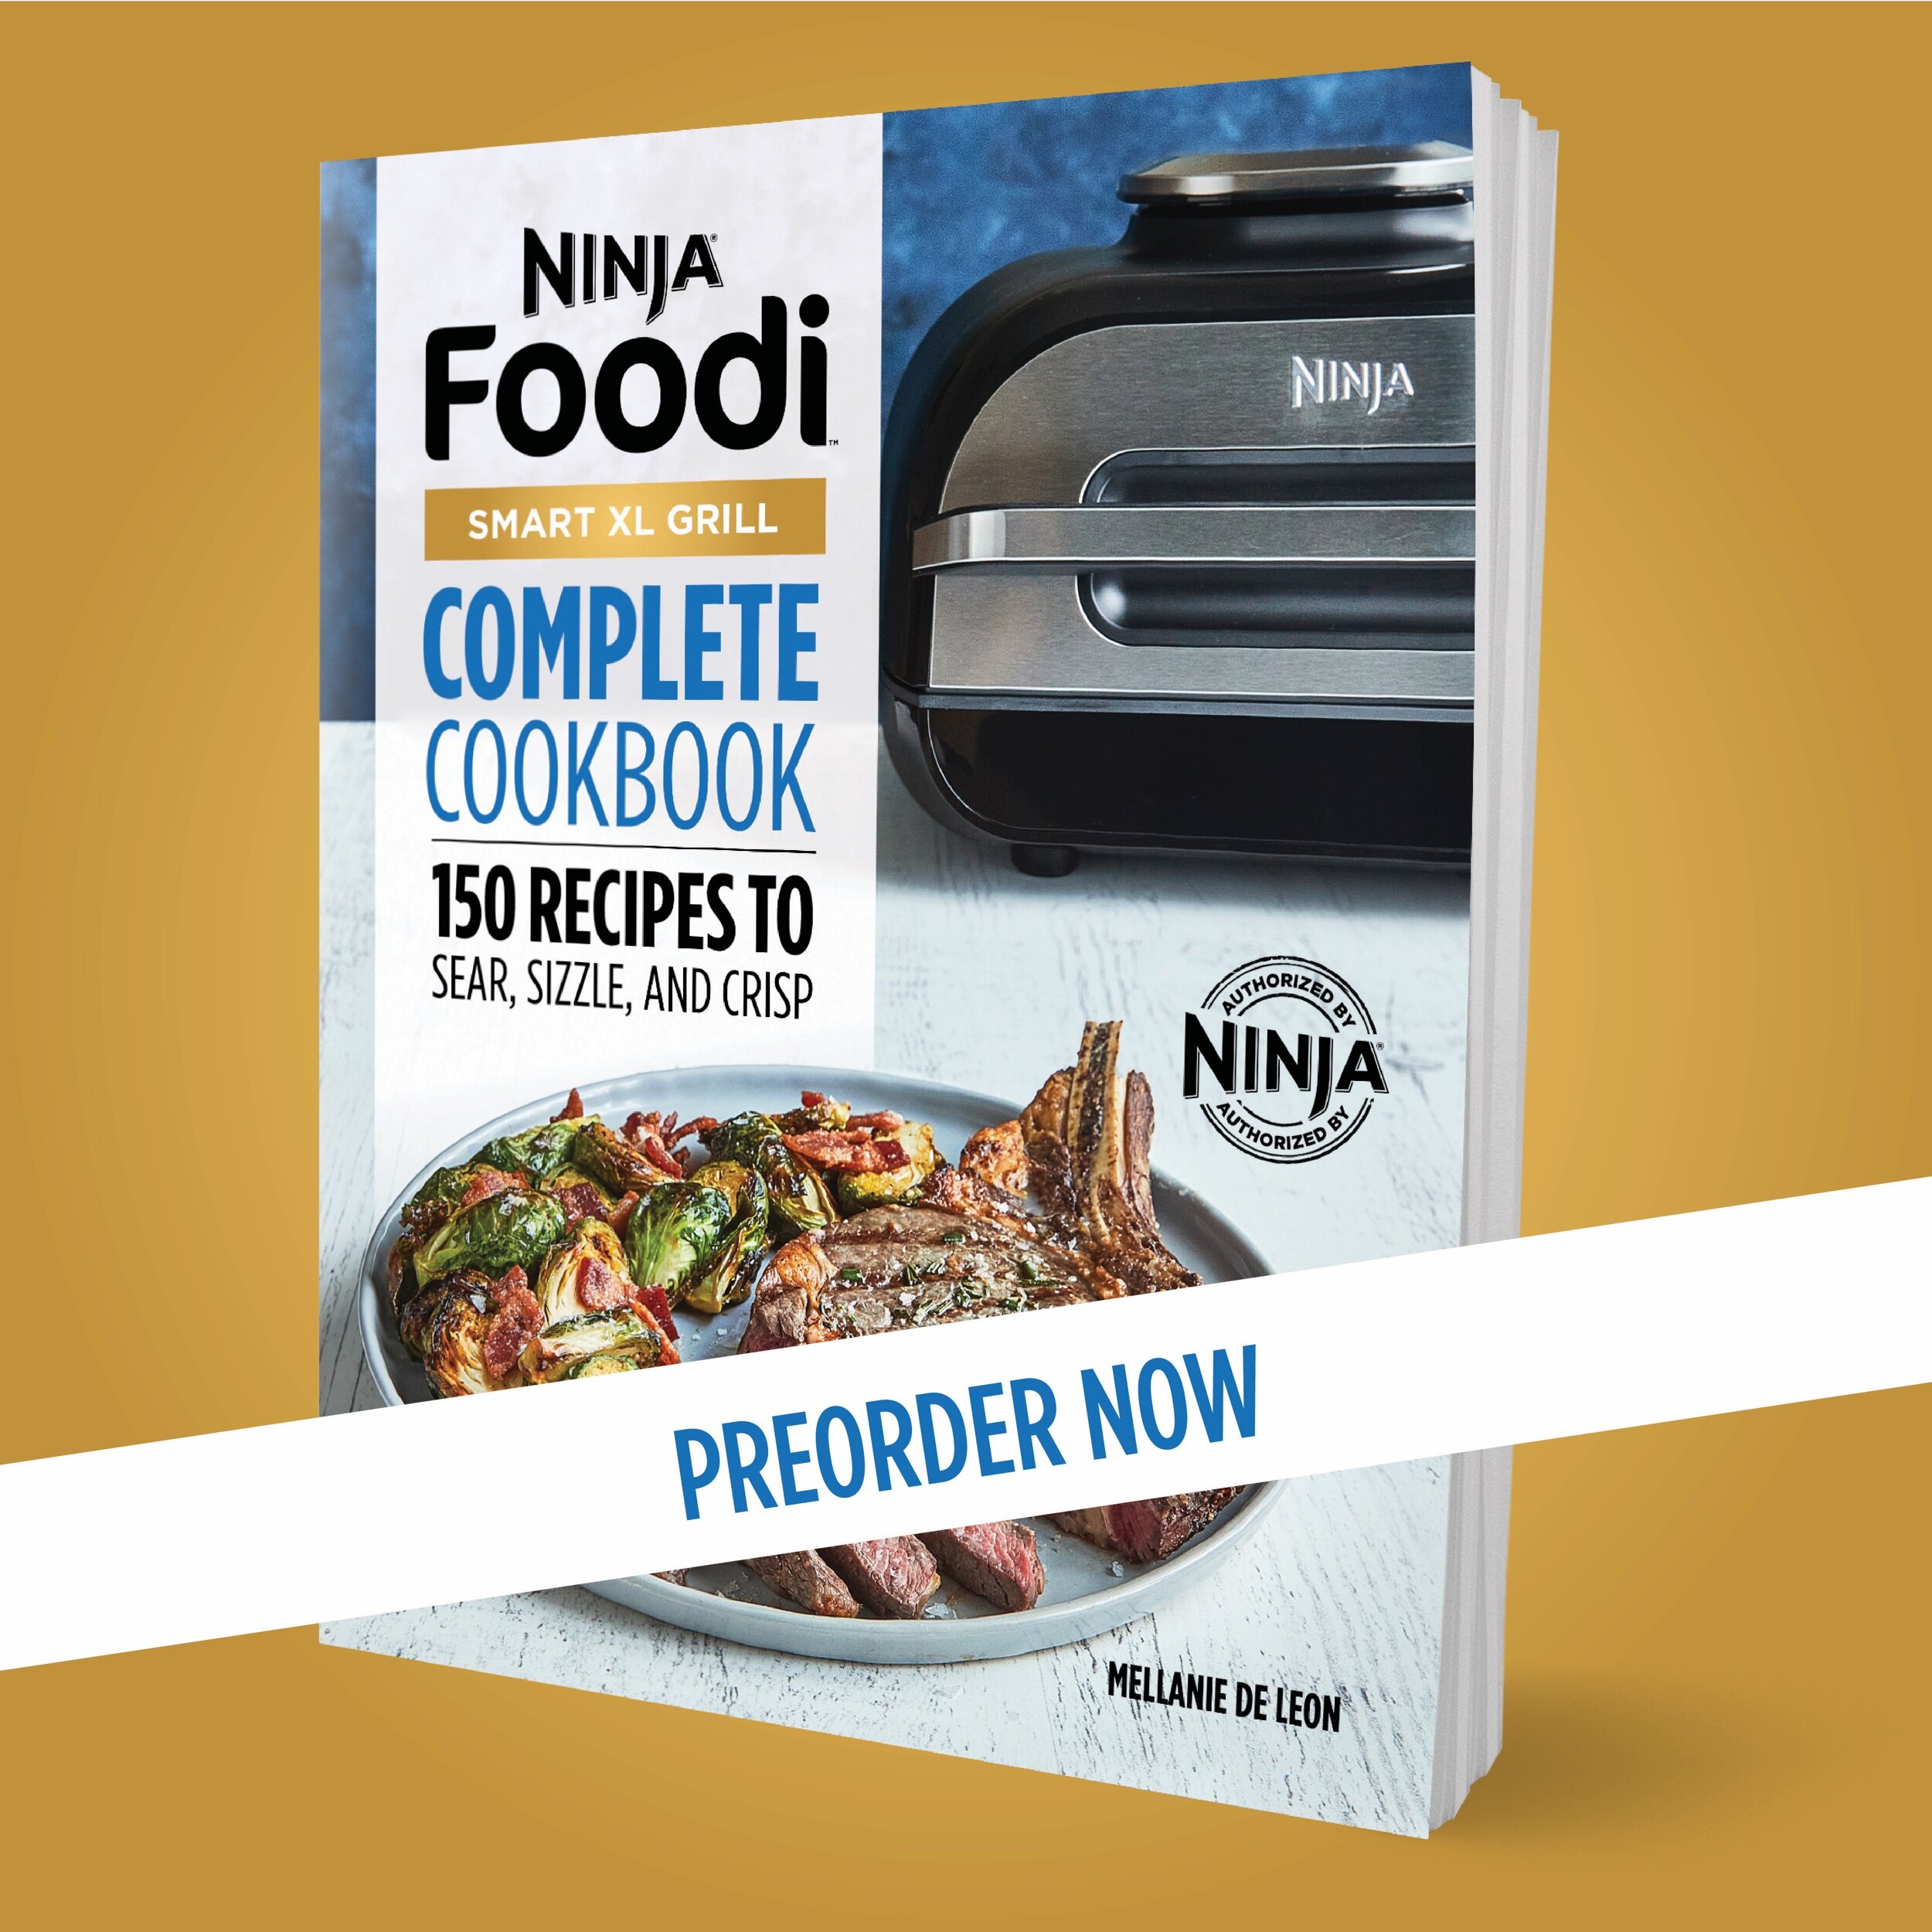 Ninja Foodi XL review: I made every meal in my new Ninja Foodi for